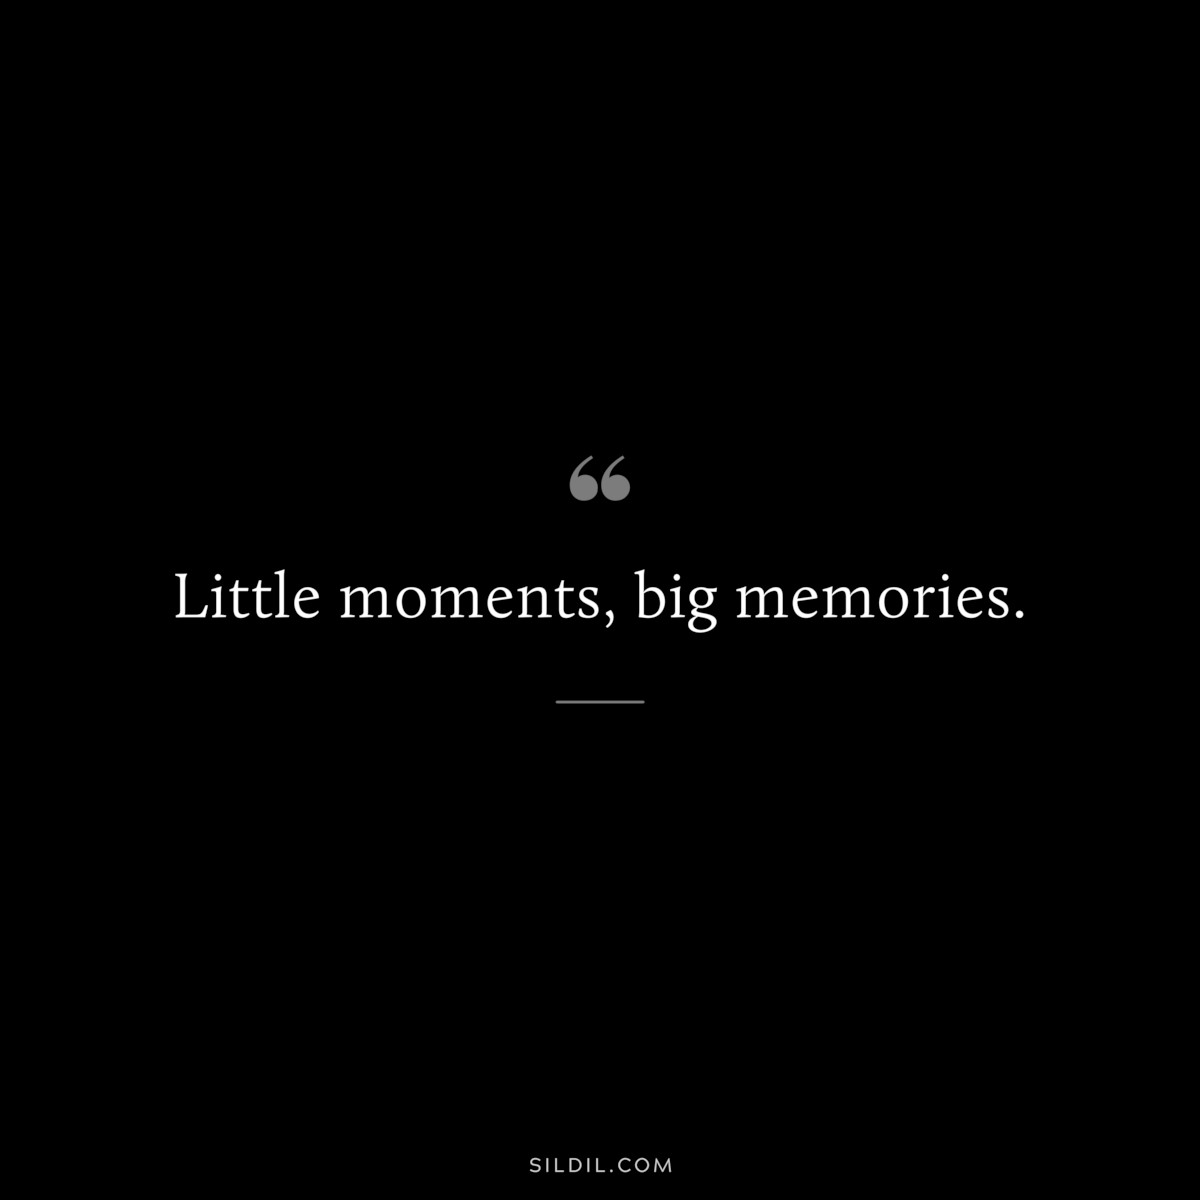 Little moments, big memories.